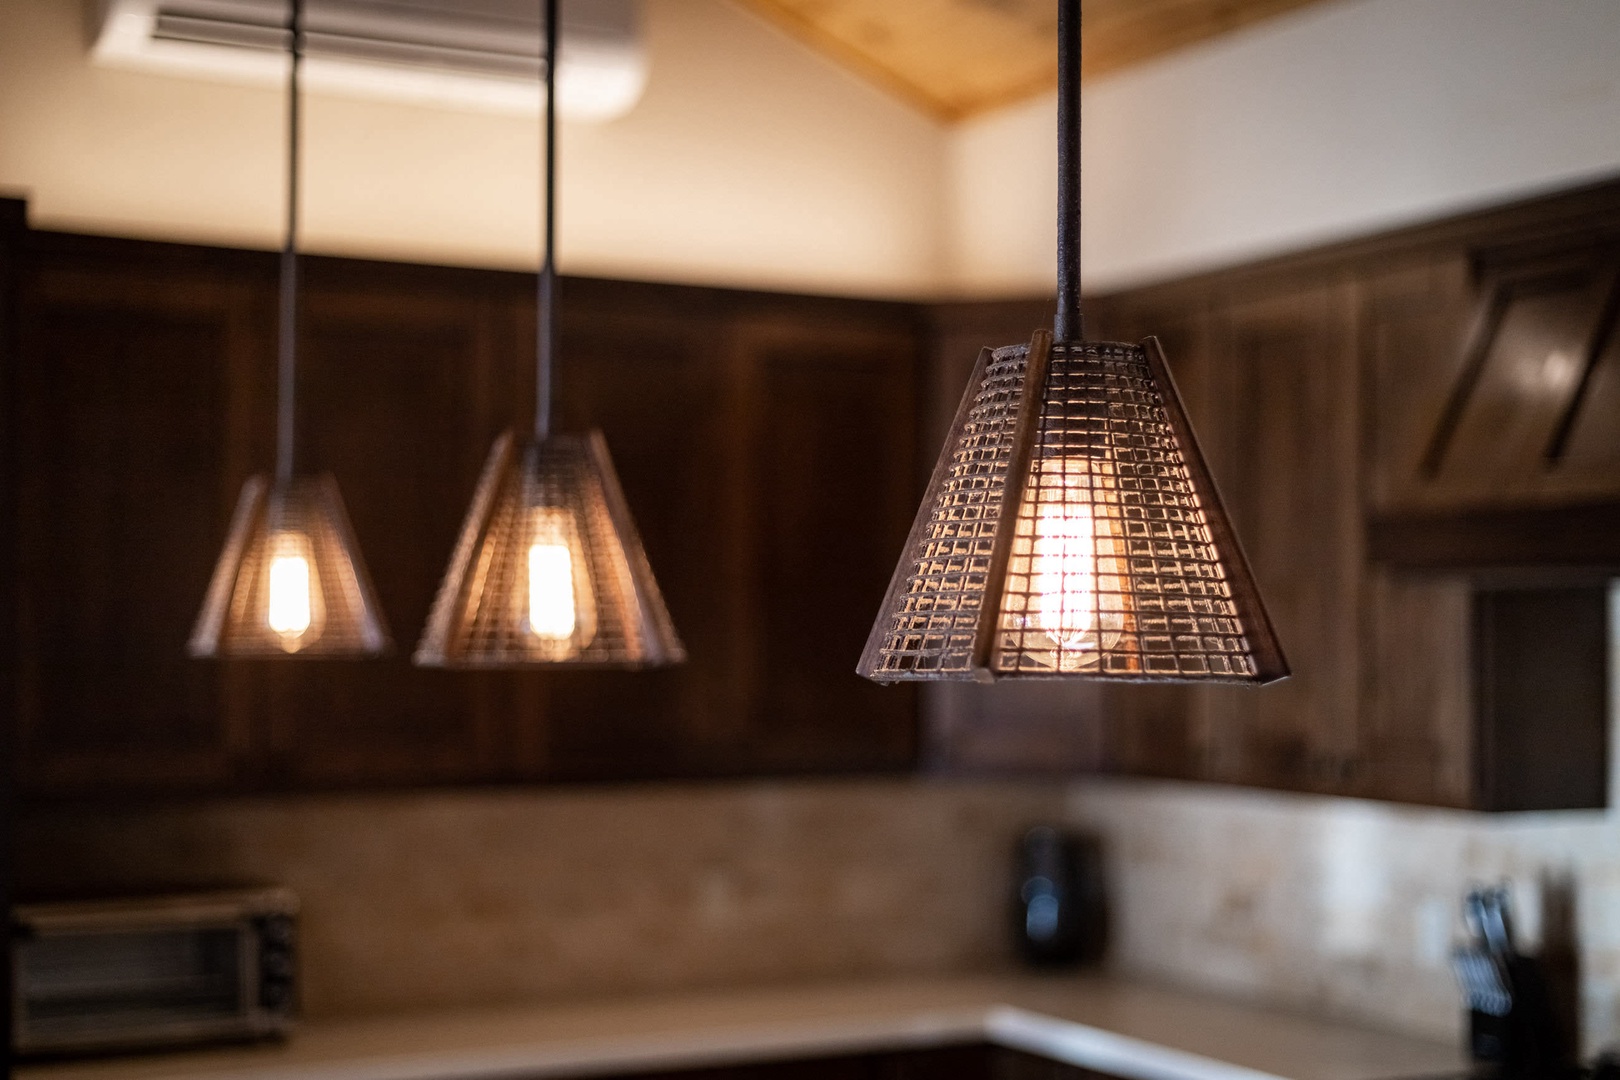 Industrial style kitchen lights